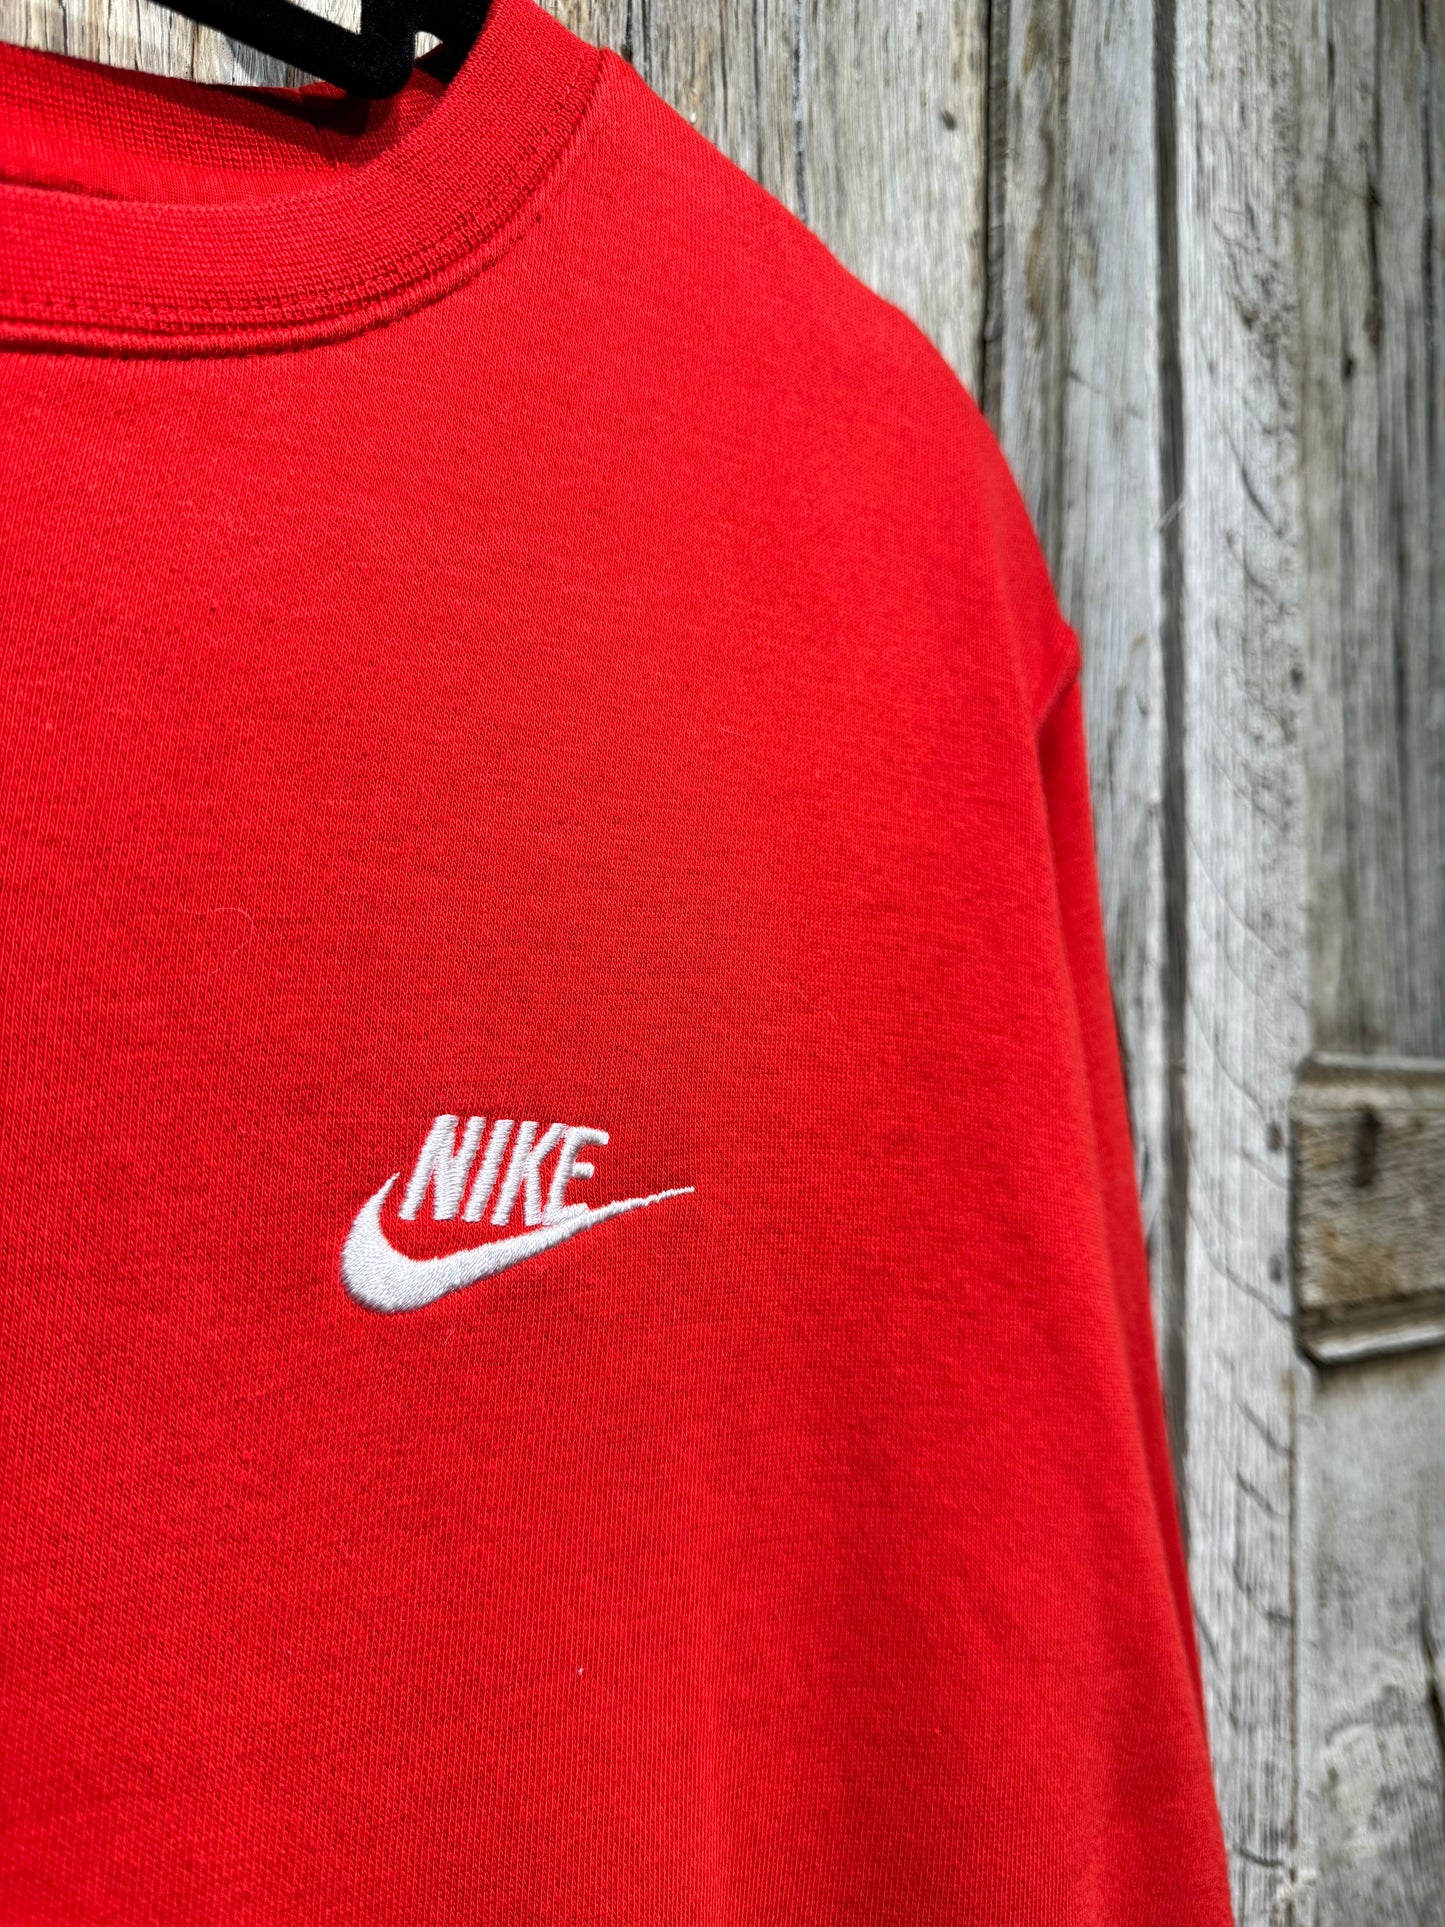 Nike Red Embroidered Logo Sweatshirt